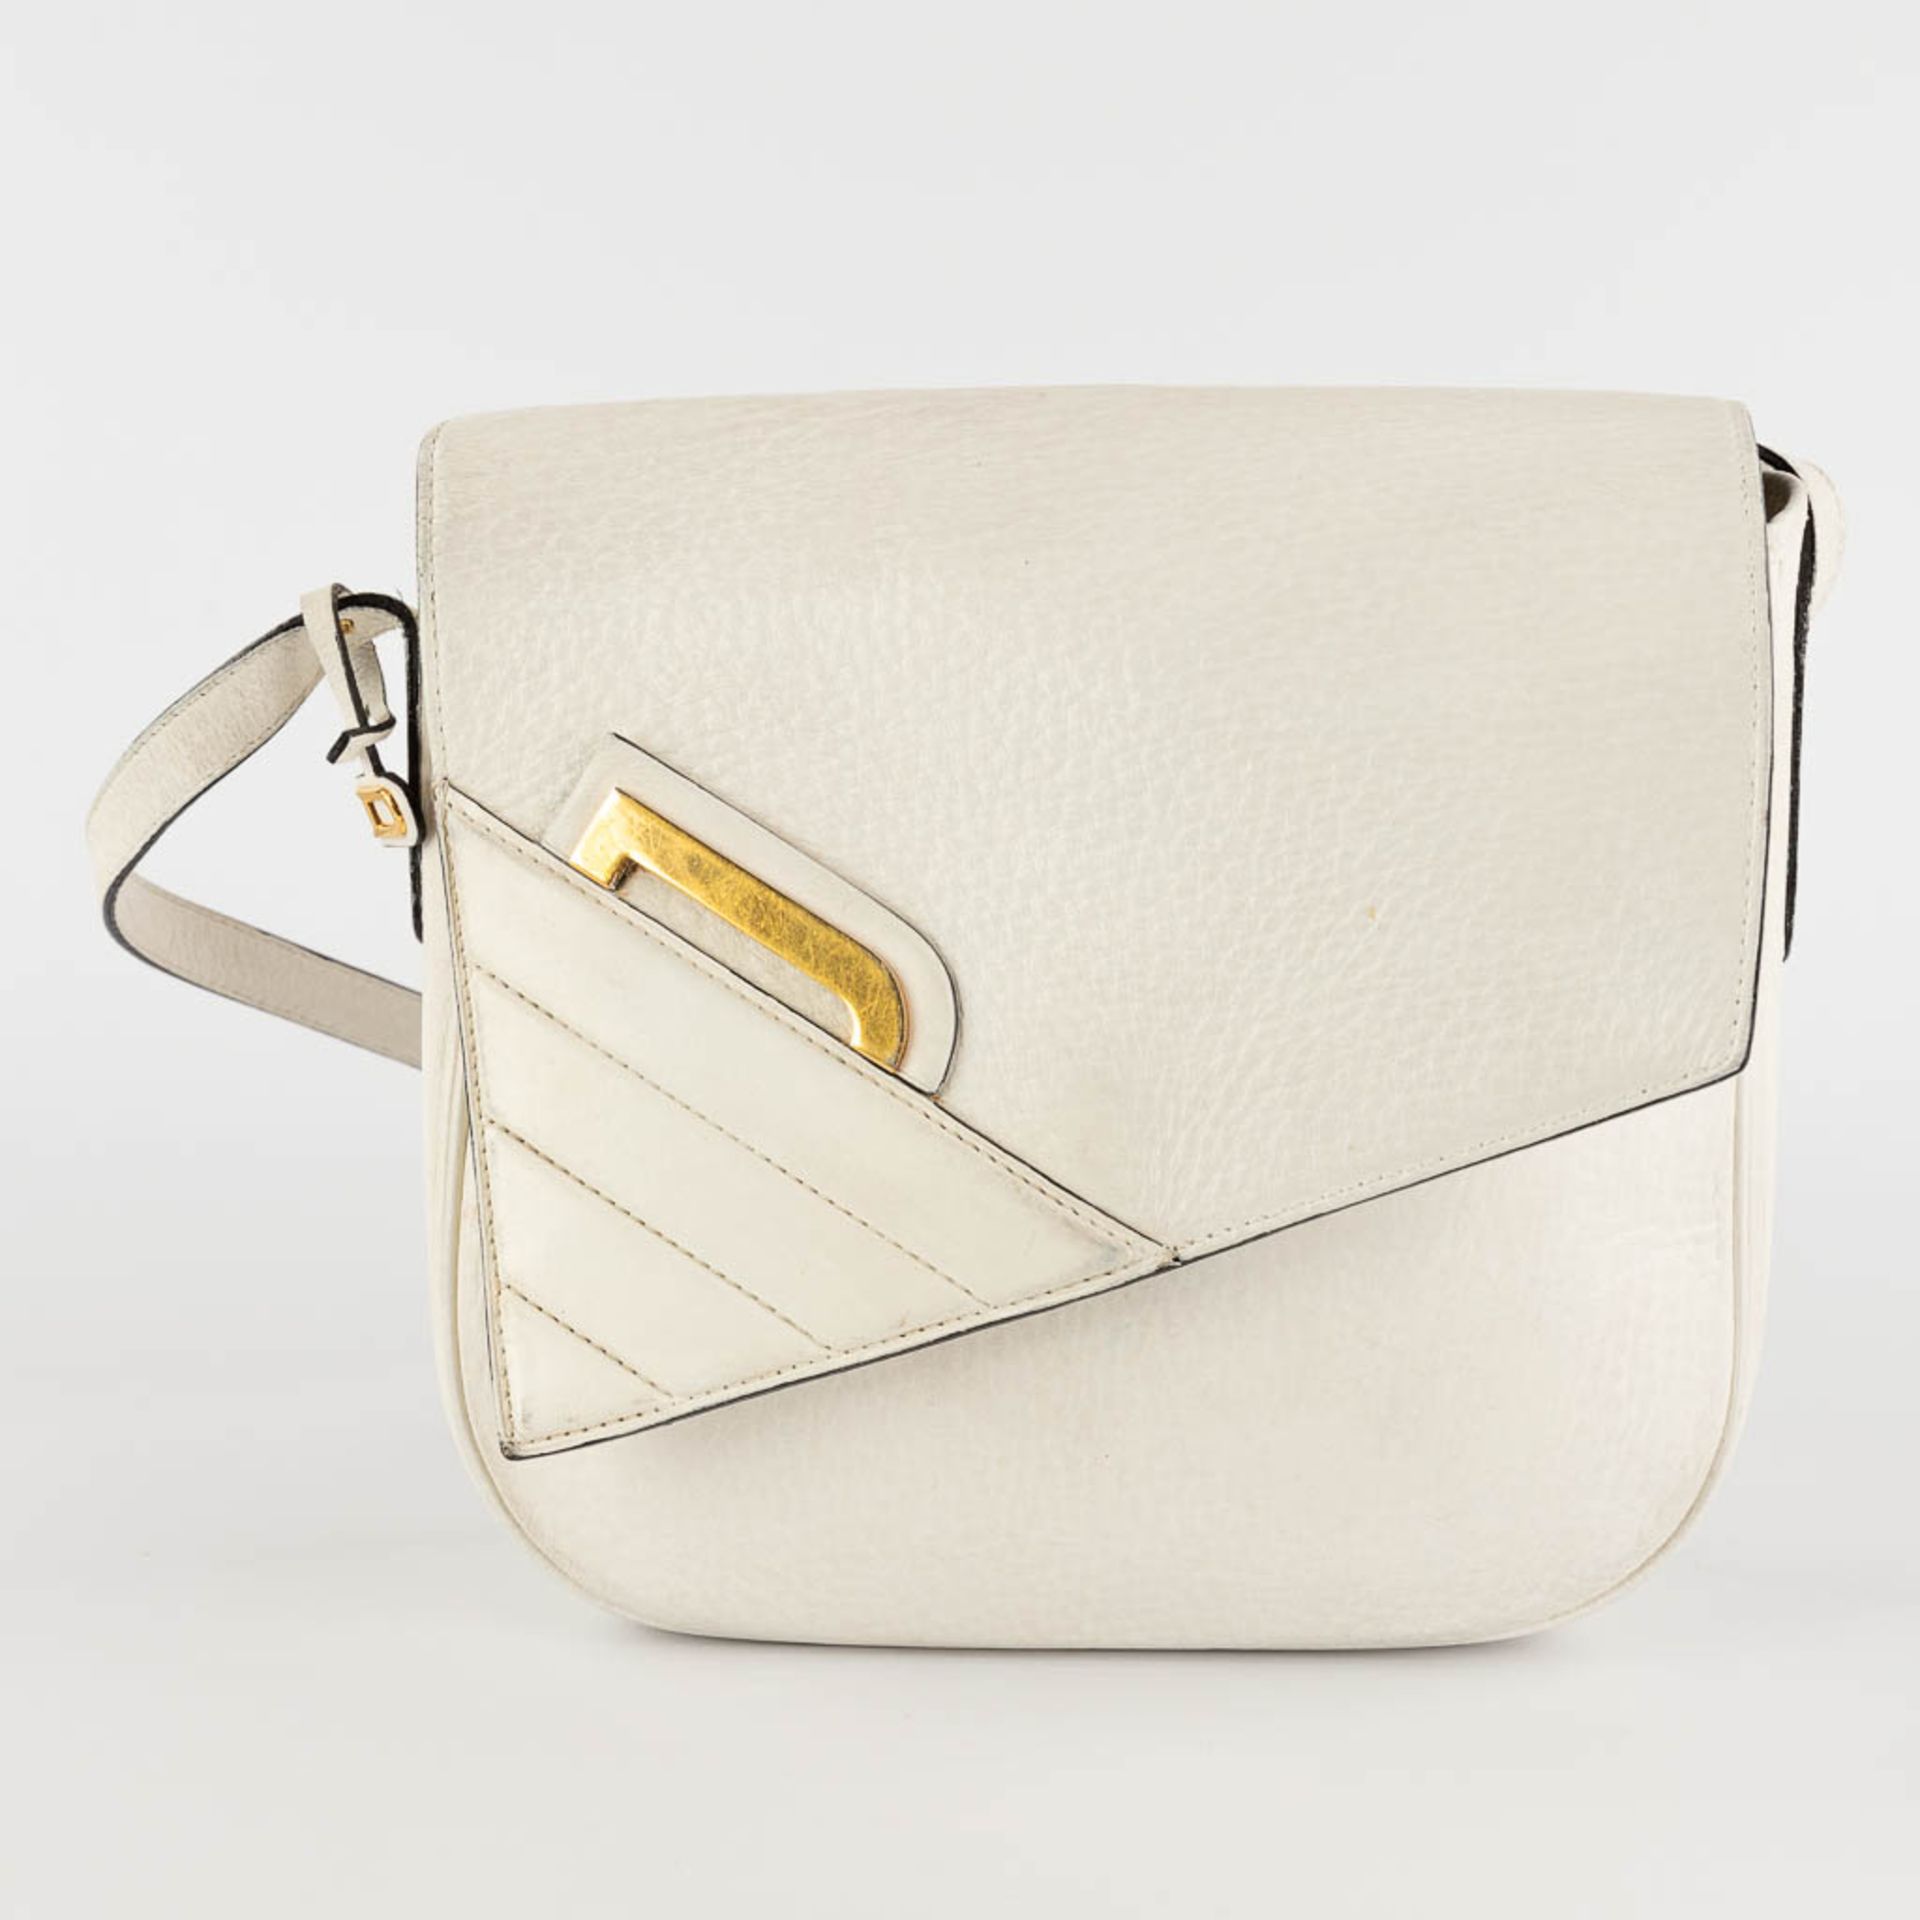 Delvaux, a cross body handbag, white leather. (W:22 x H:22 cm) - Image 3 of 17